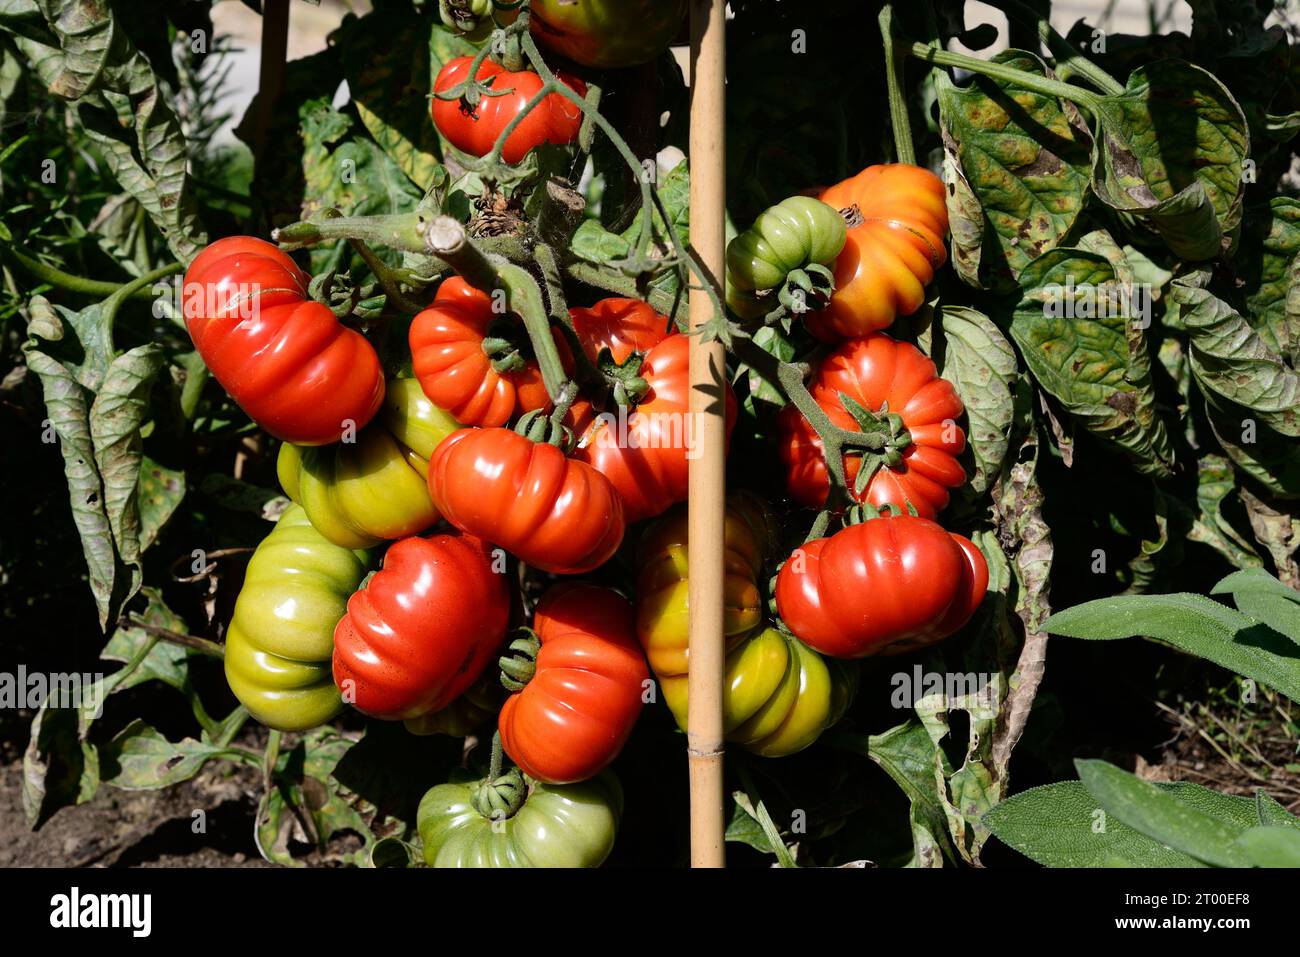 Costoluto Fiorentino tomatoes growing on the vine in a garden veg plot, UK, Europe Stock Photo